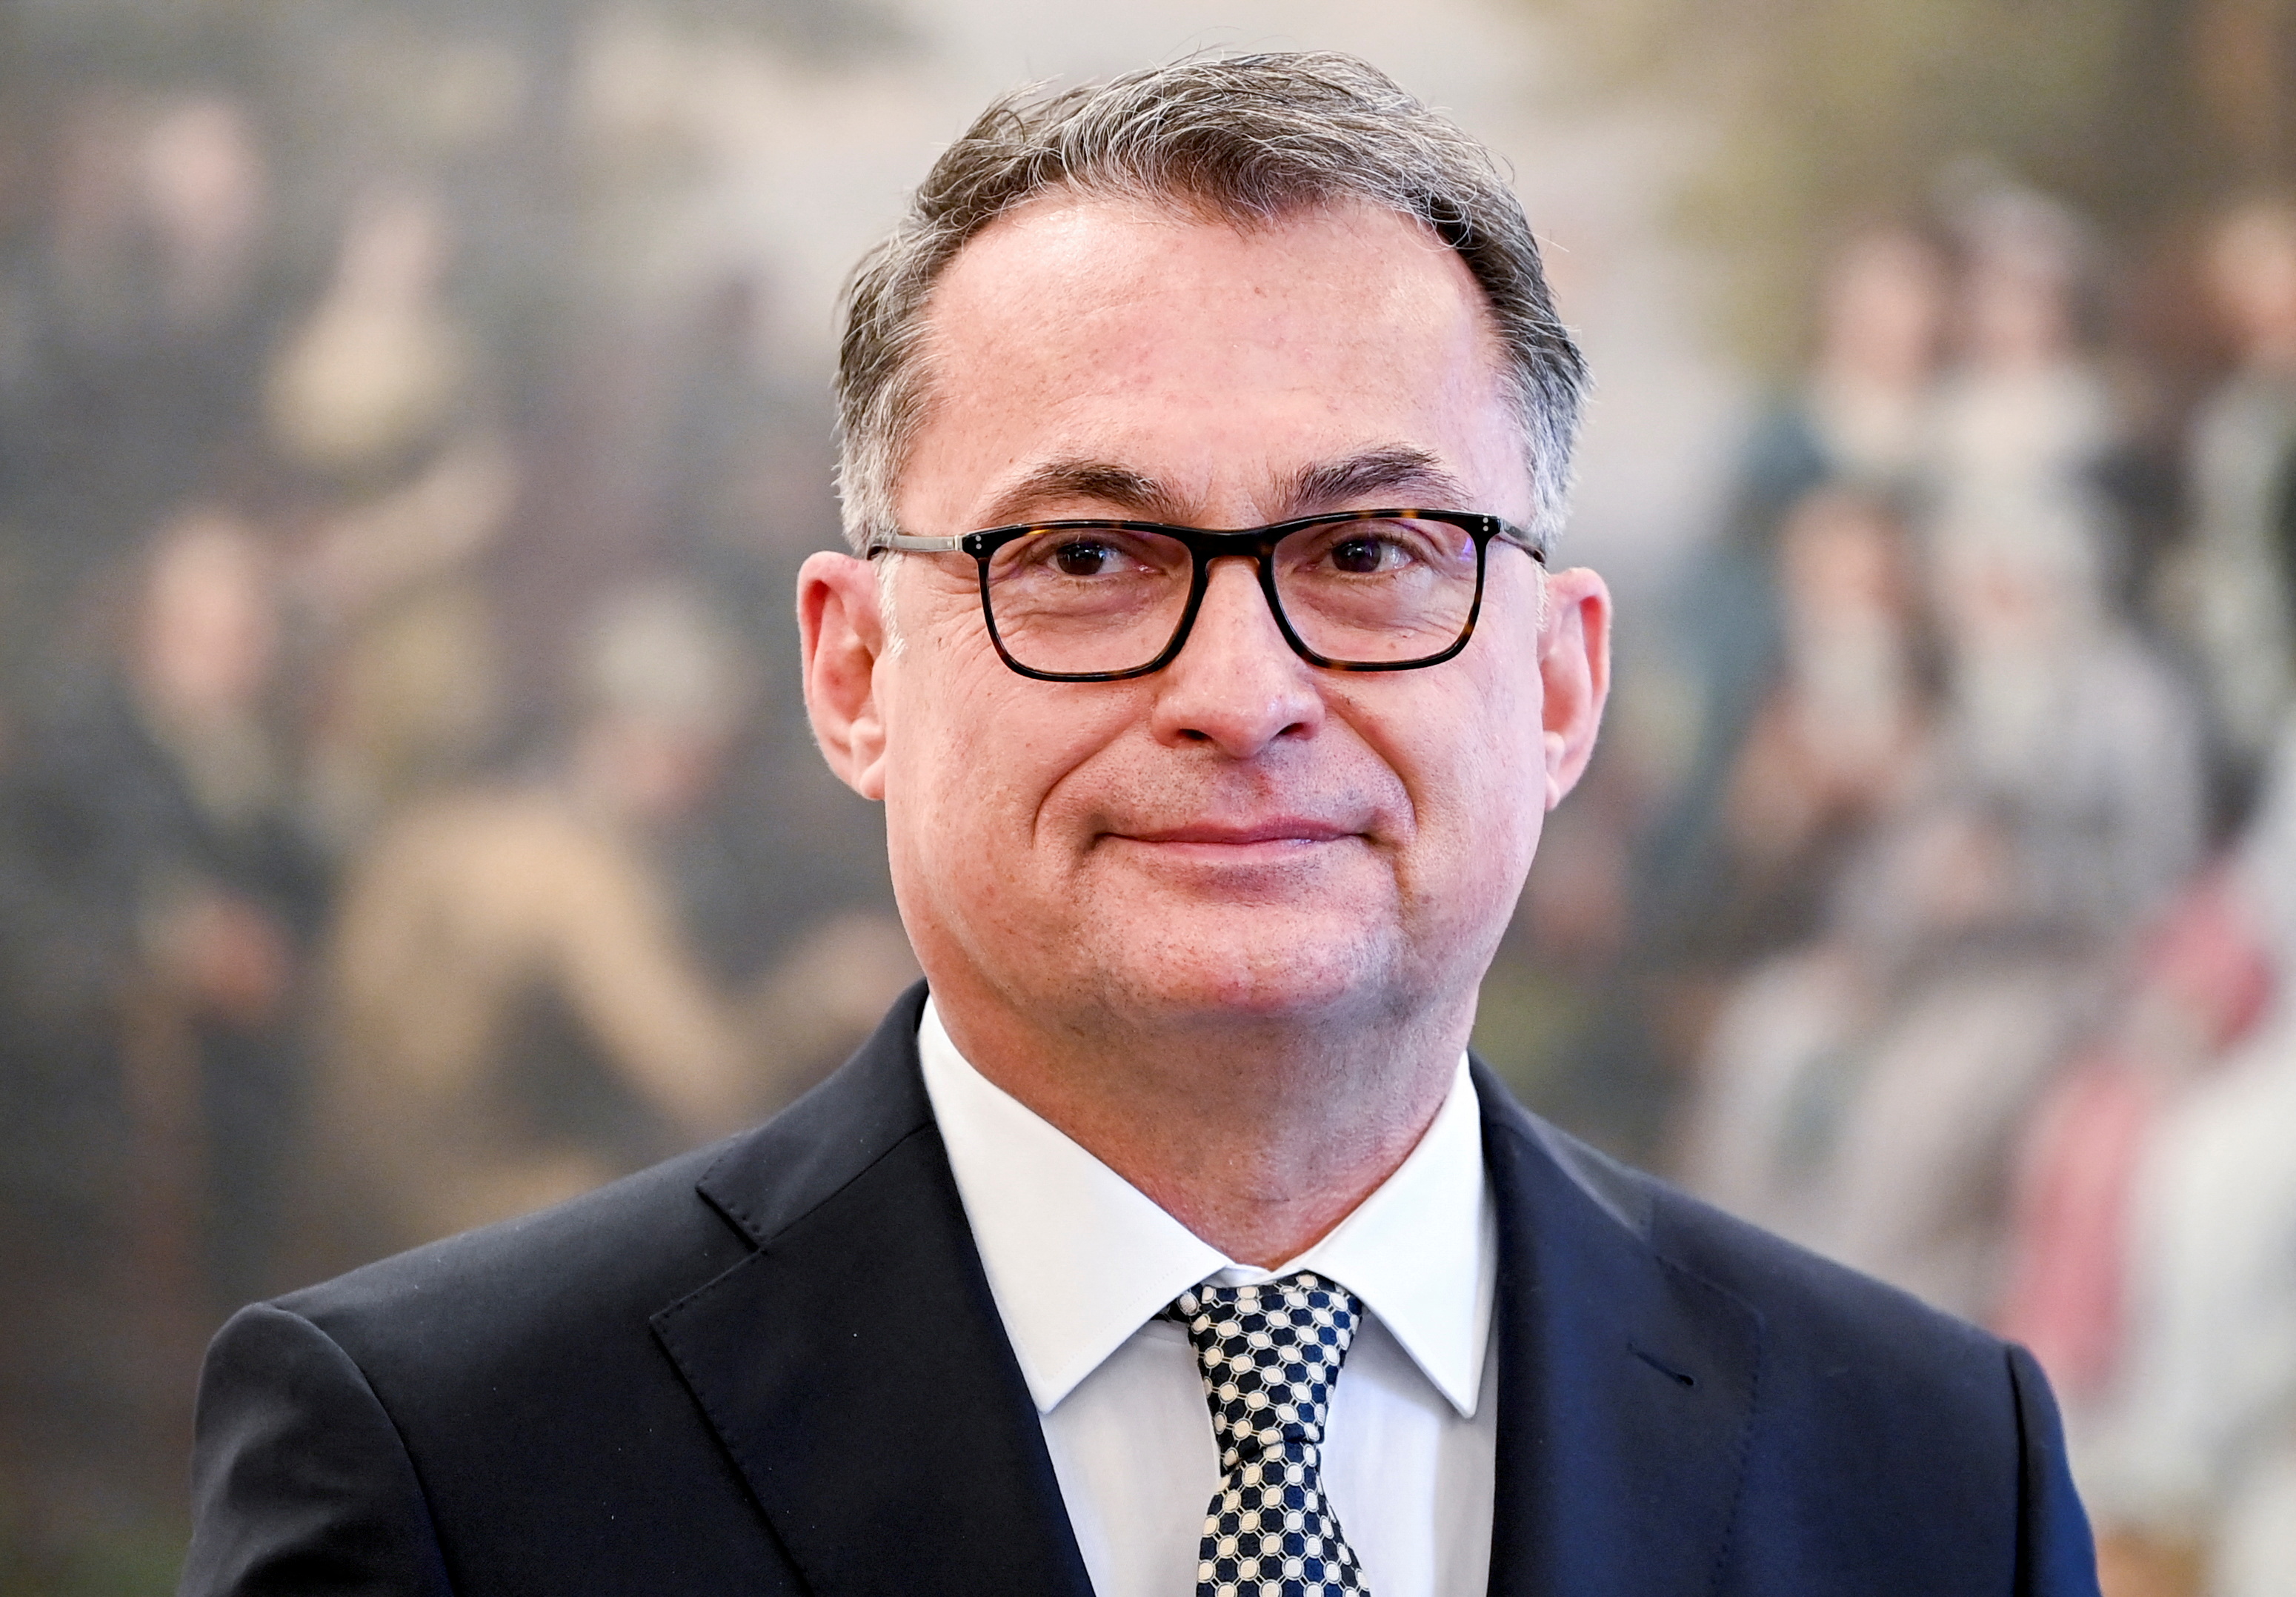 Joachim Nagel is appointed new Bundesbank head by German President Steinmeier